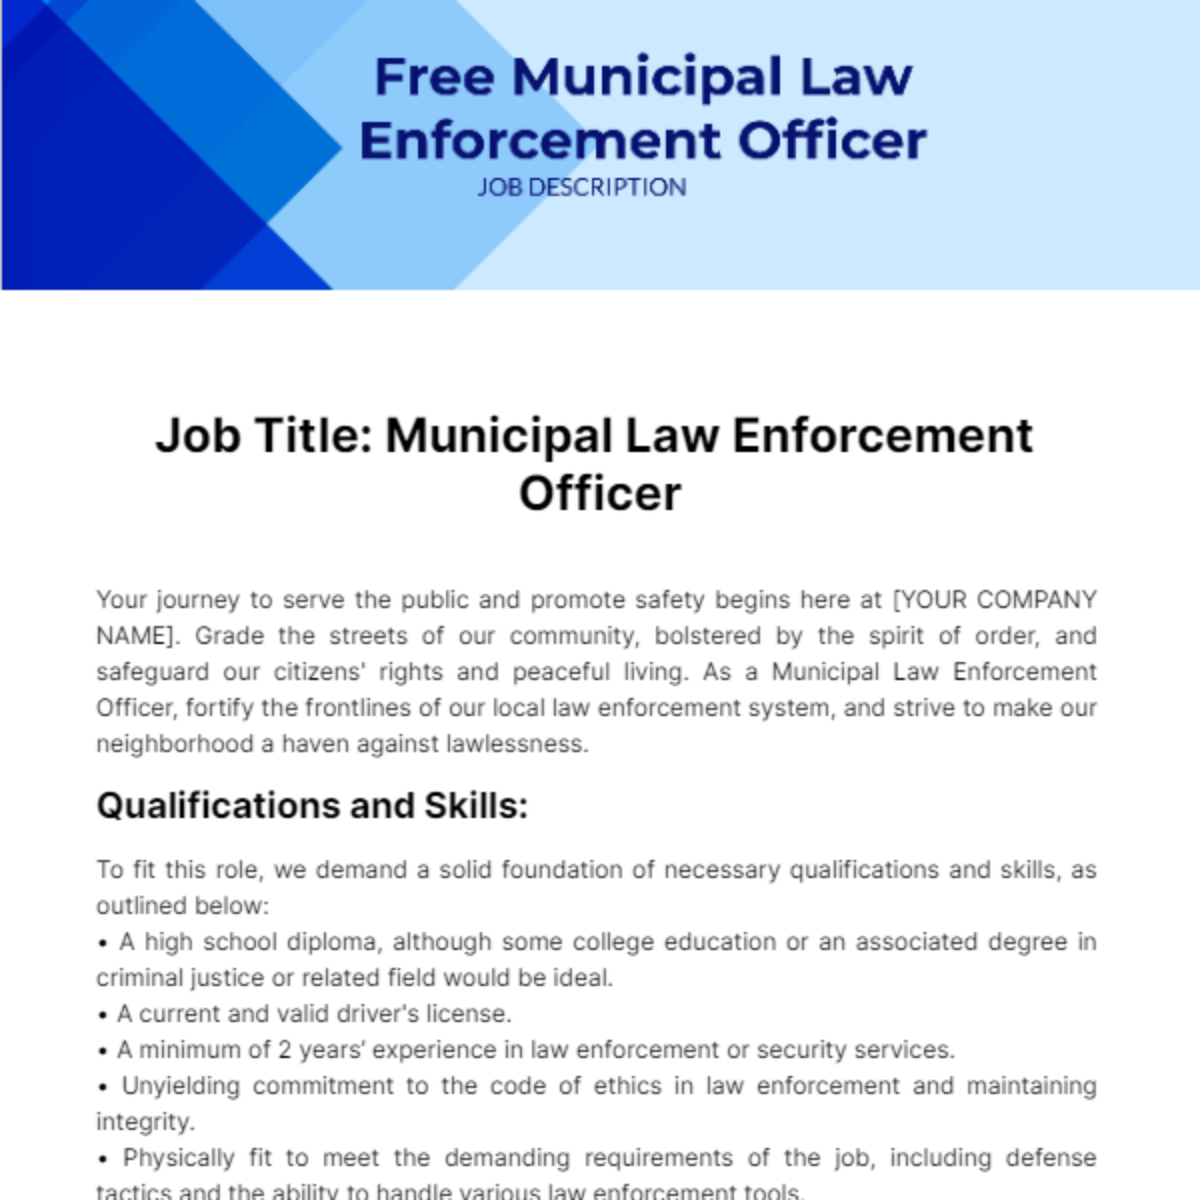 Free Municipal Law Enforcement Officer Job Description Template